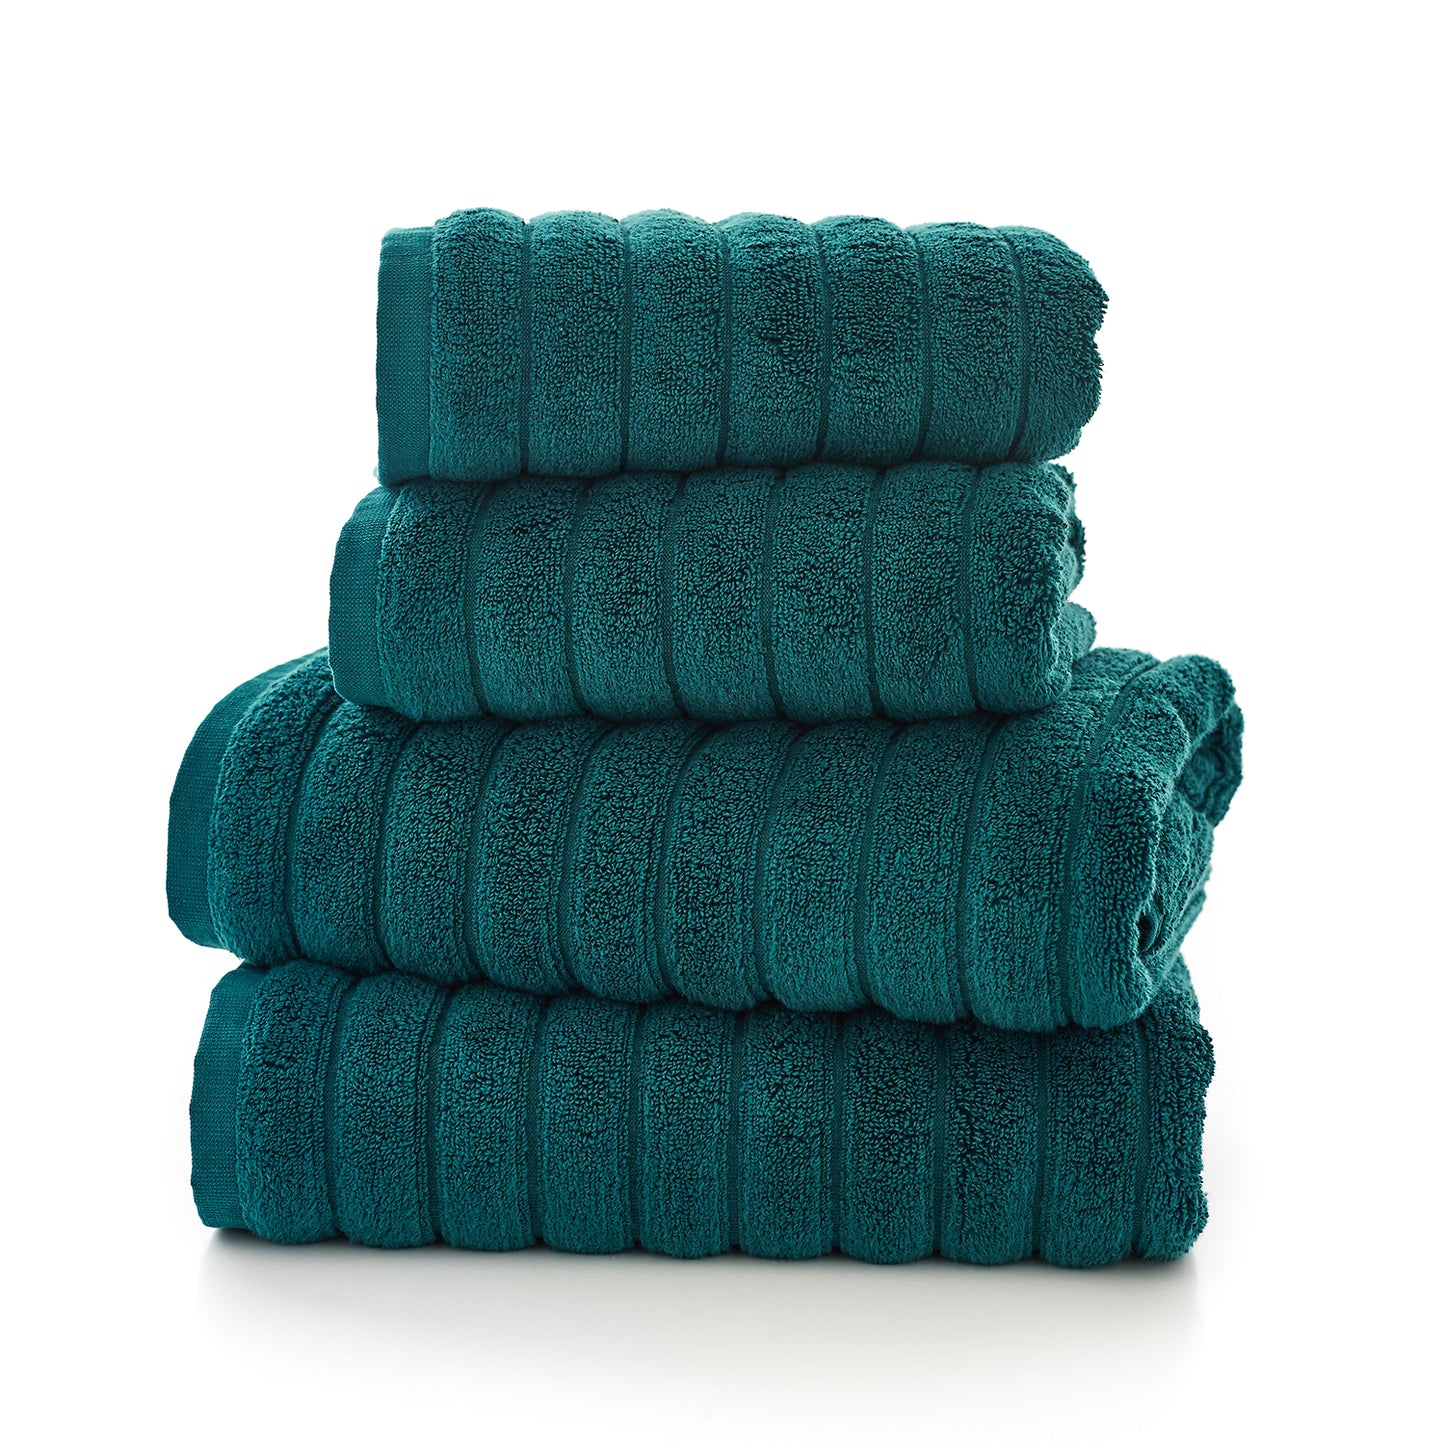 The Lyndon Company Ribbleton 700gsm Zero Twist Dark Green Towels